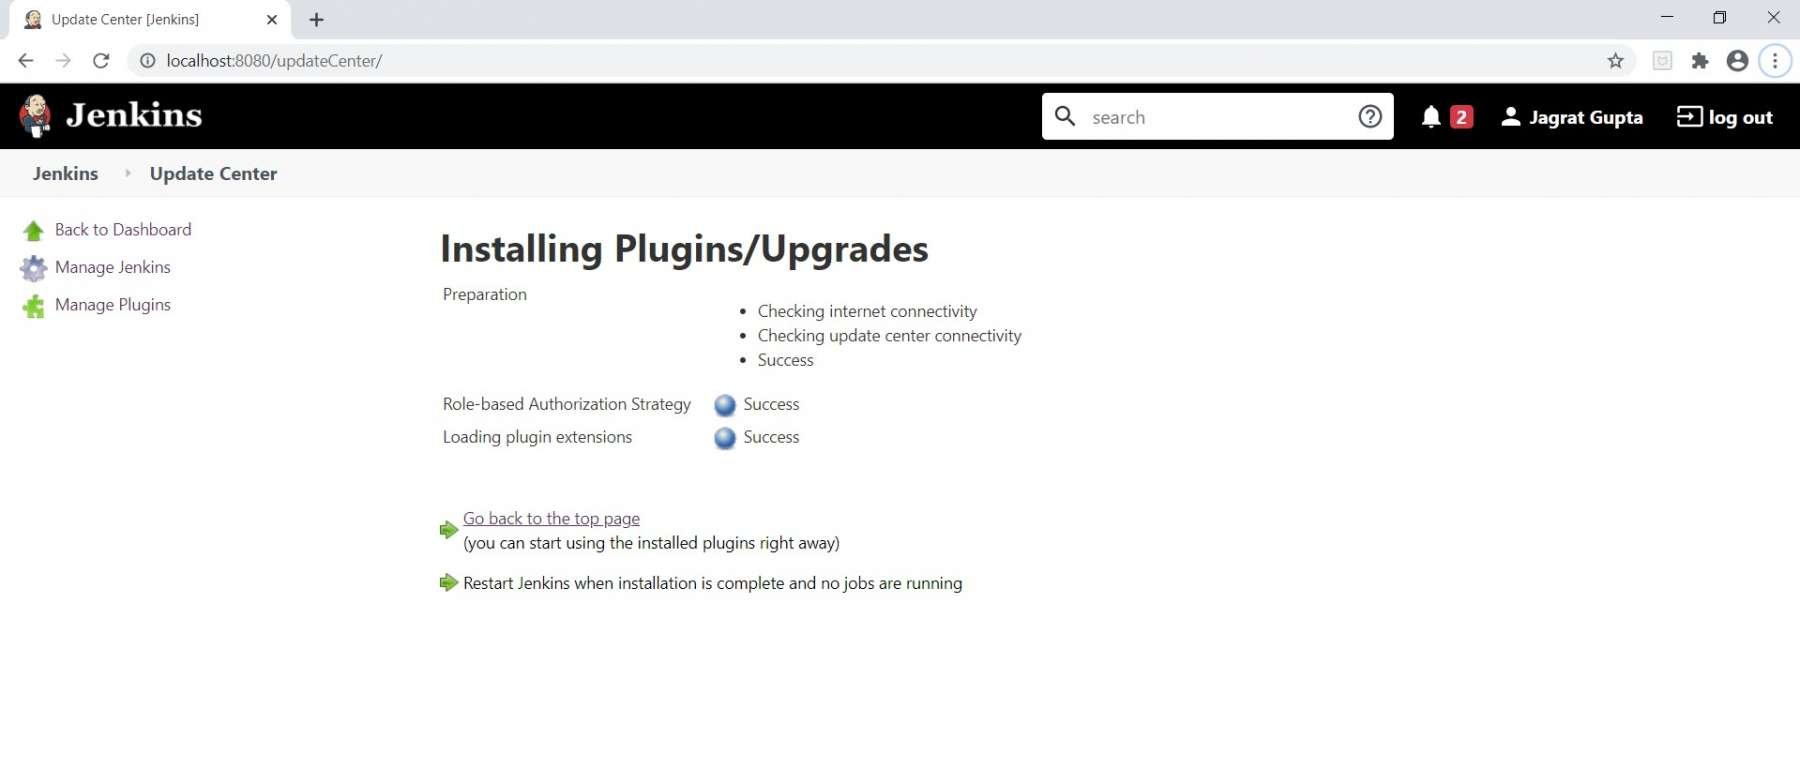 Jenkins User Management - successful installation of plugin